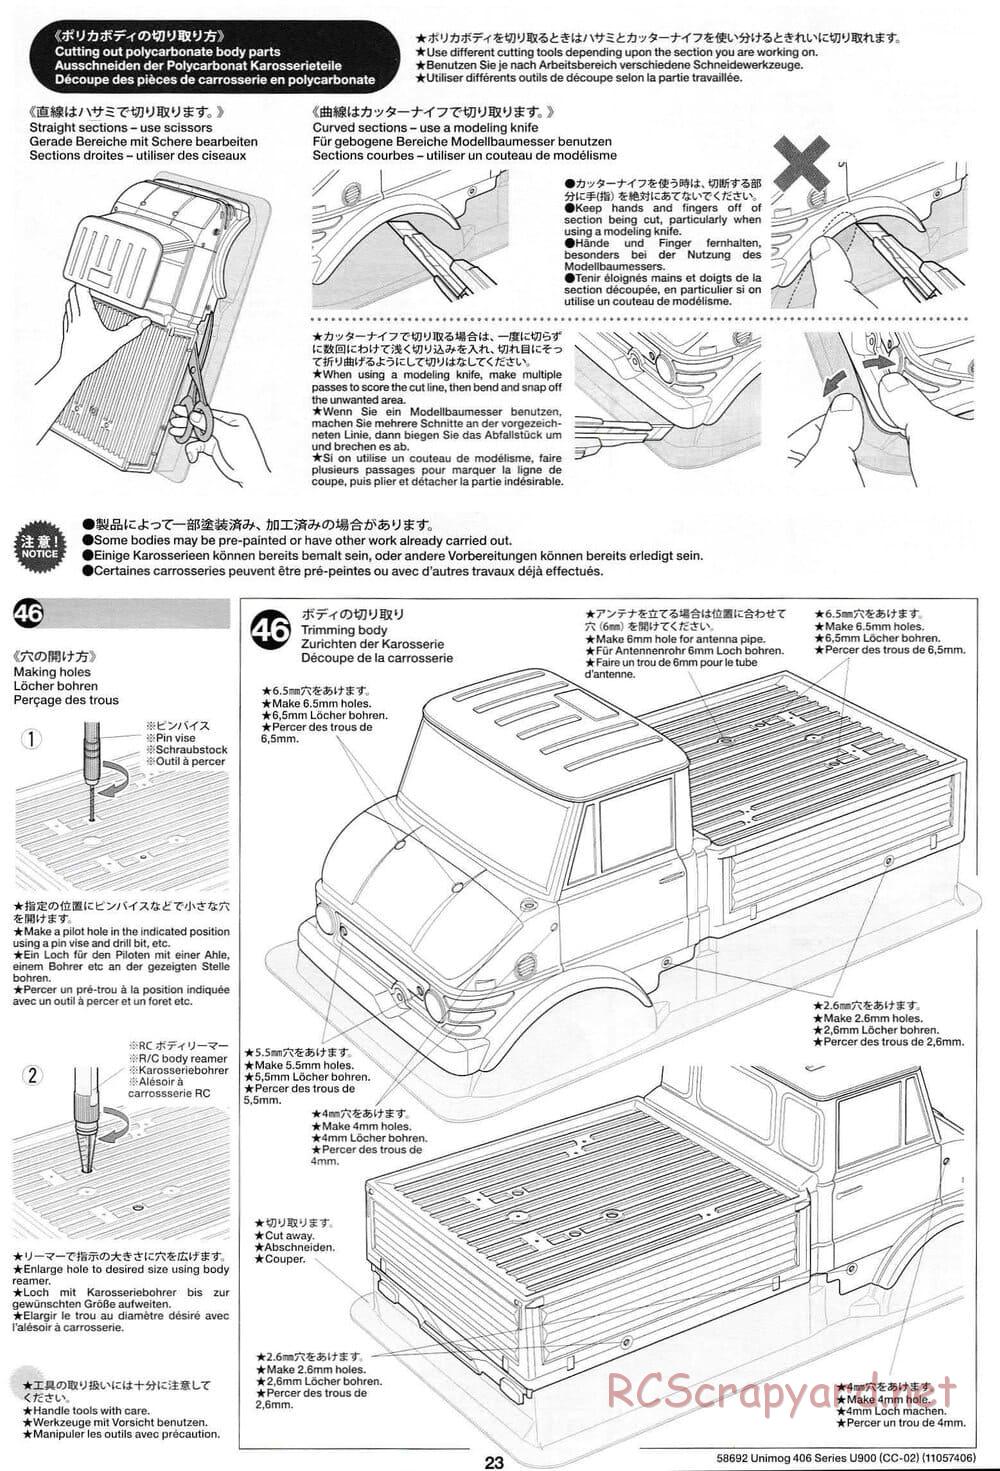 Tamiya - Mercedes-Benz Unimog 406 Series U900 - CC-02 Chassis - Manual - Page 23